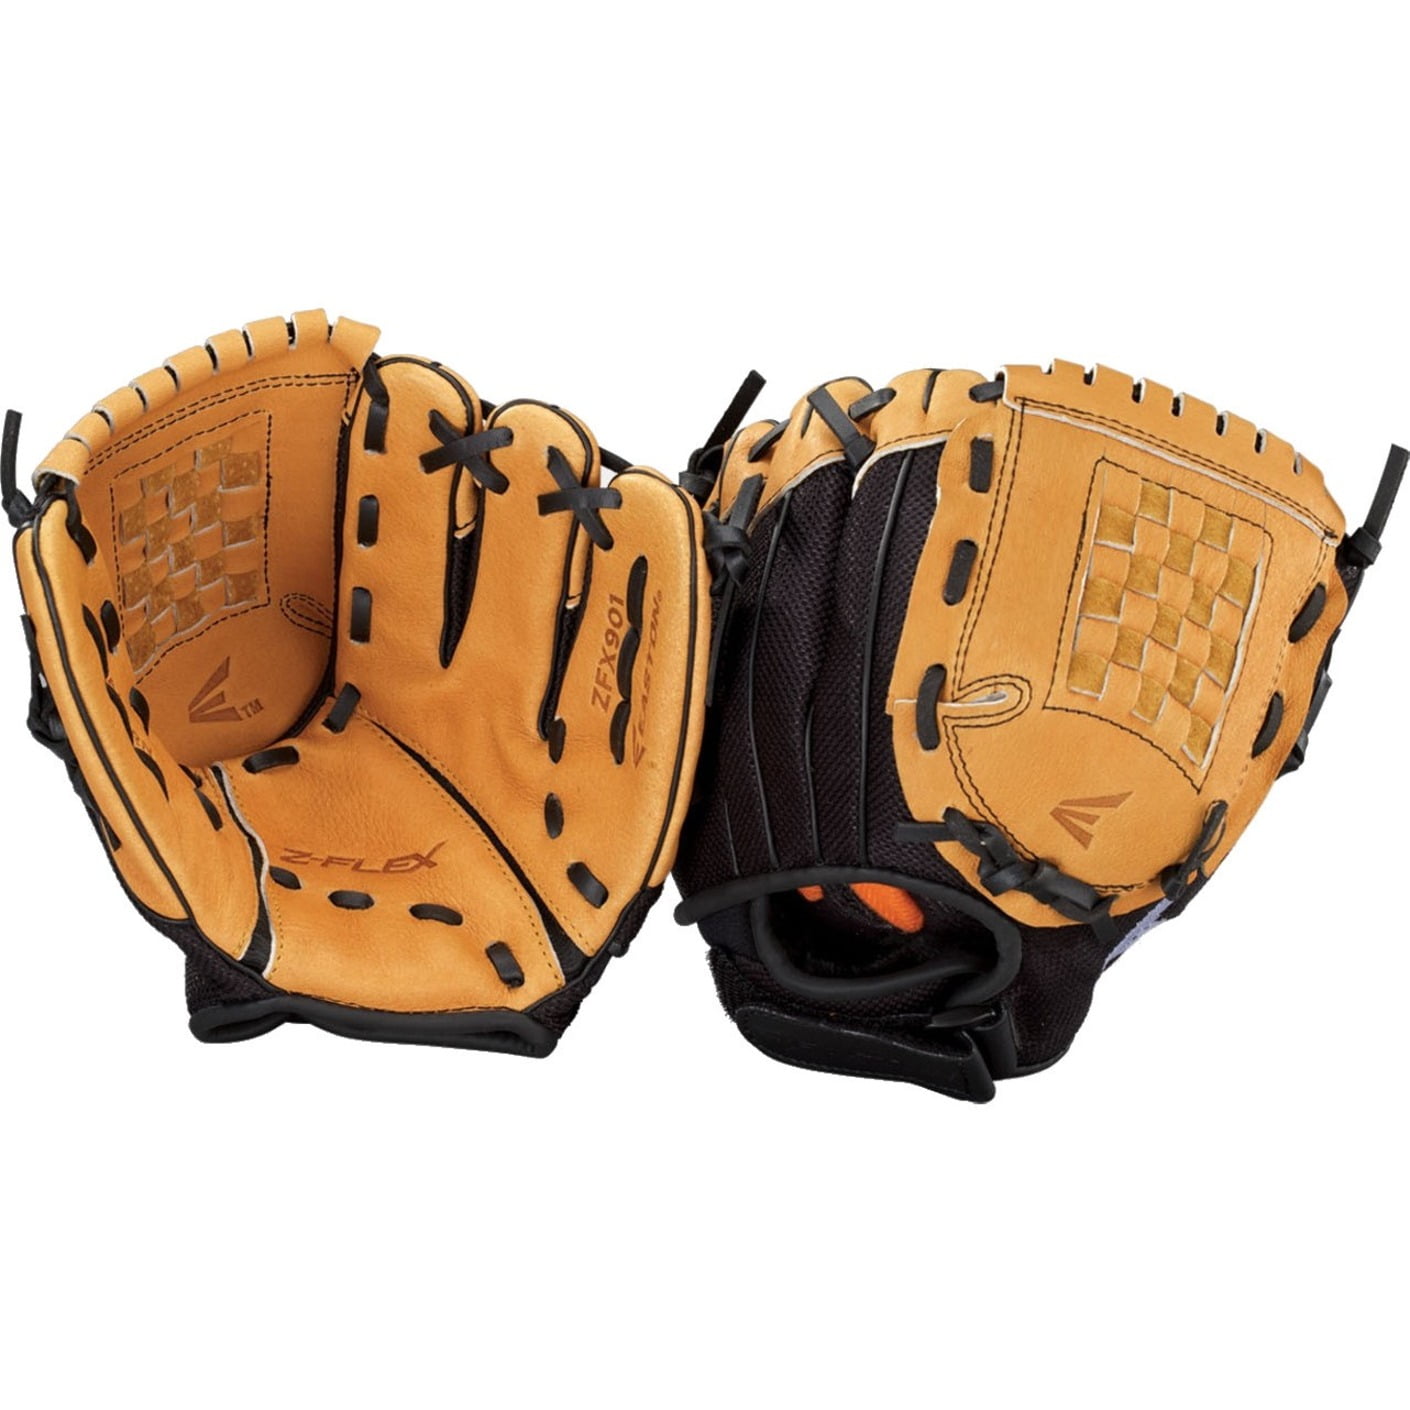 Easton Z-Flex 10 Youth Baseball Glove 